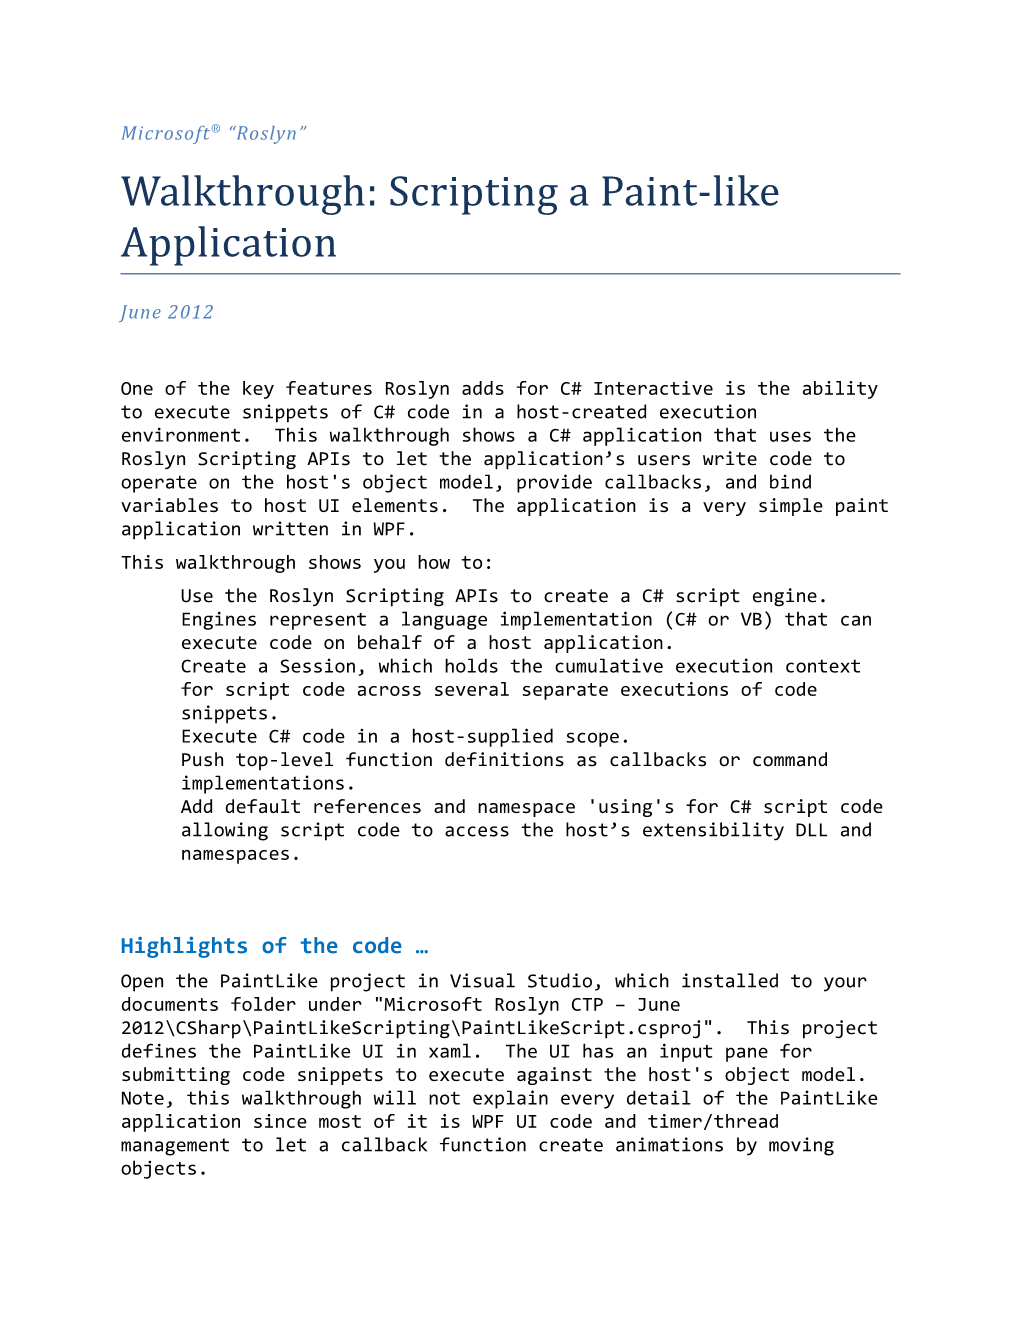 Walkthrough: Scripting a Paint-Like Application